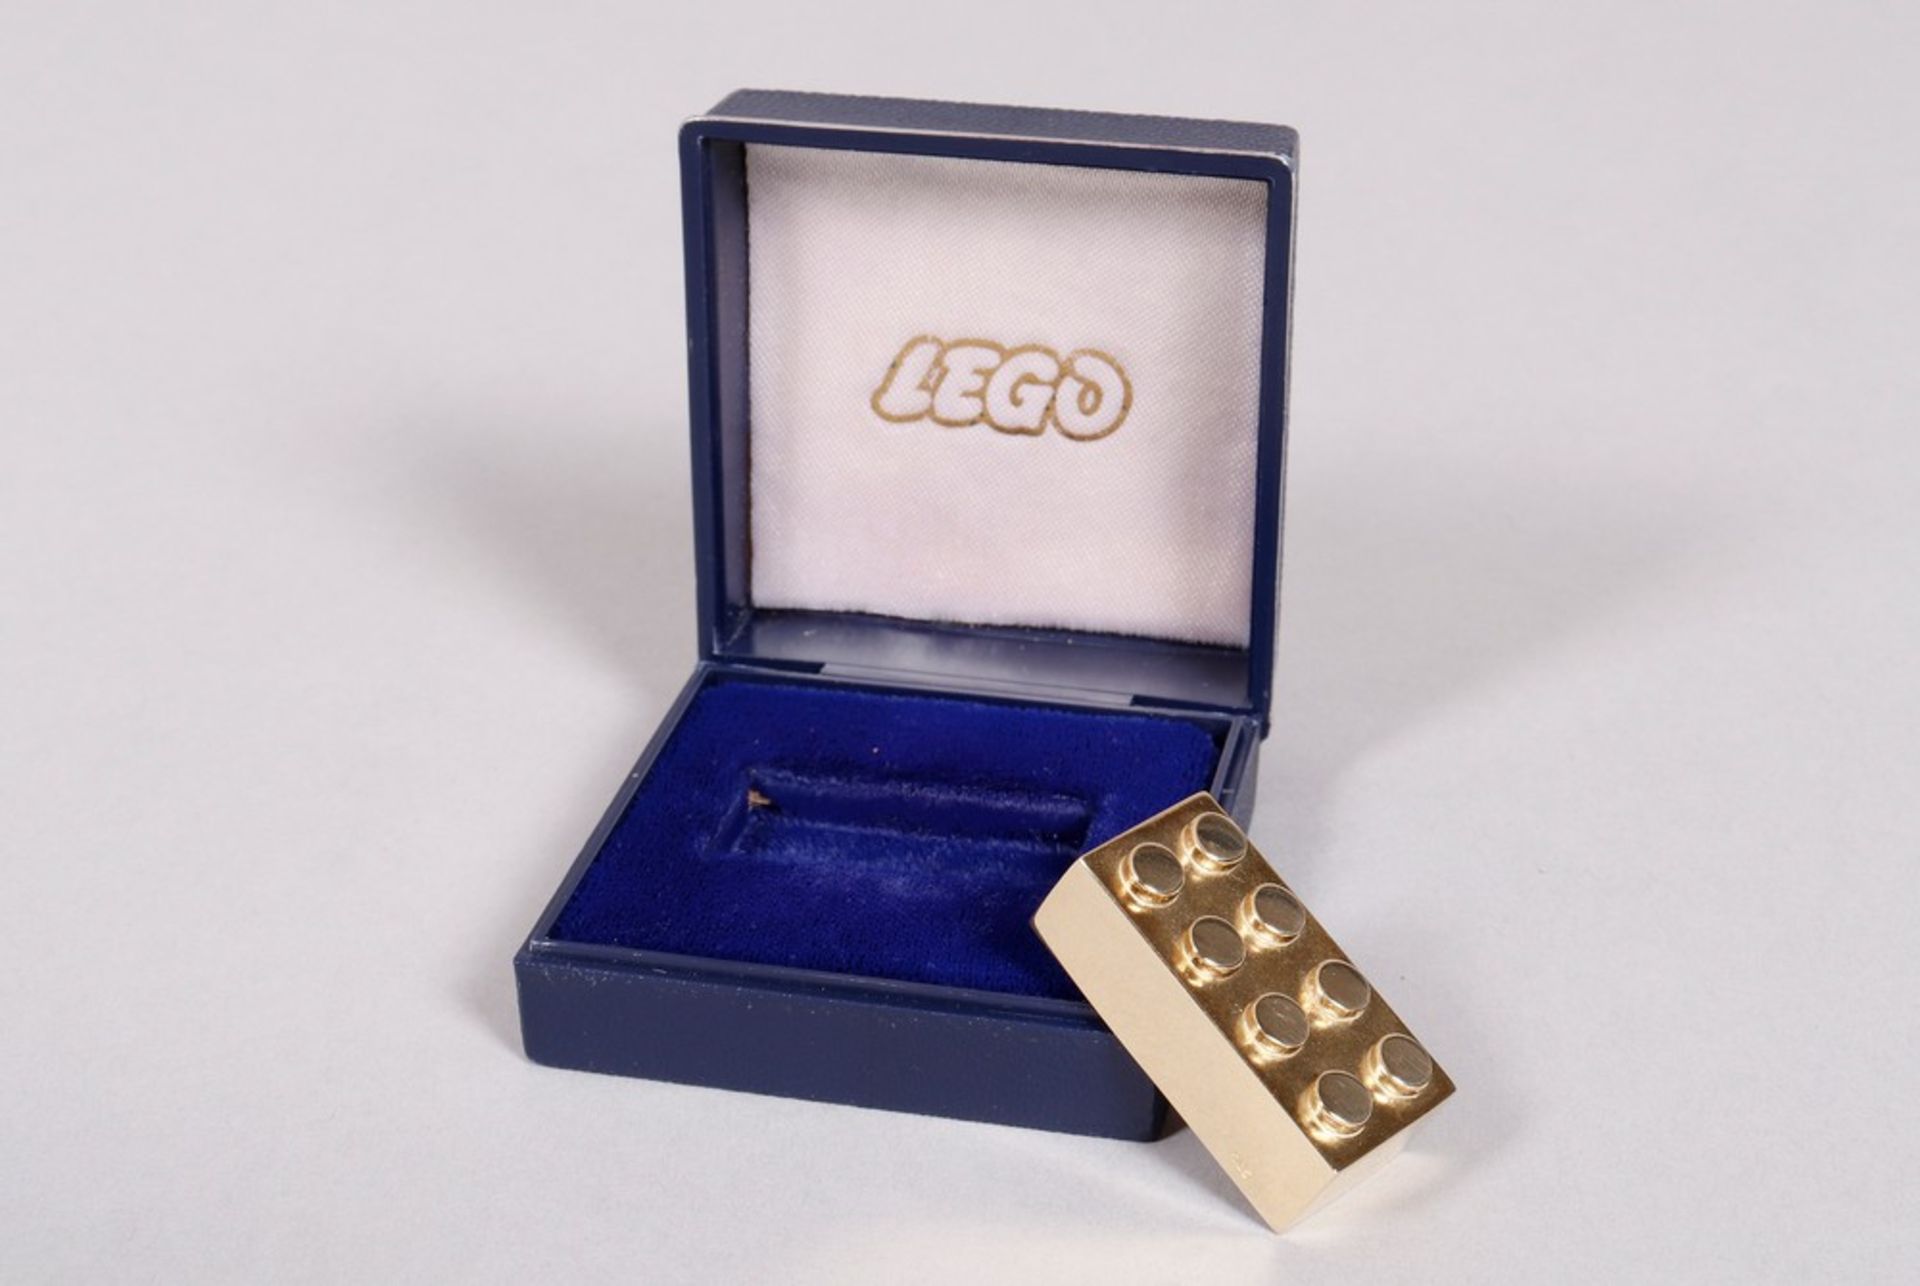 Anniversary Lego brick in box, 585 Gold, c. 1992 - Image 9 of 11